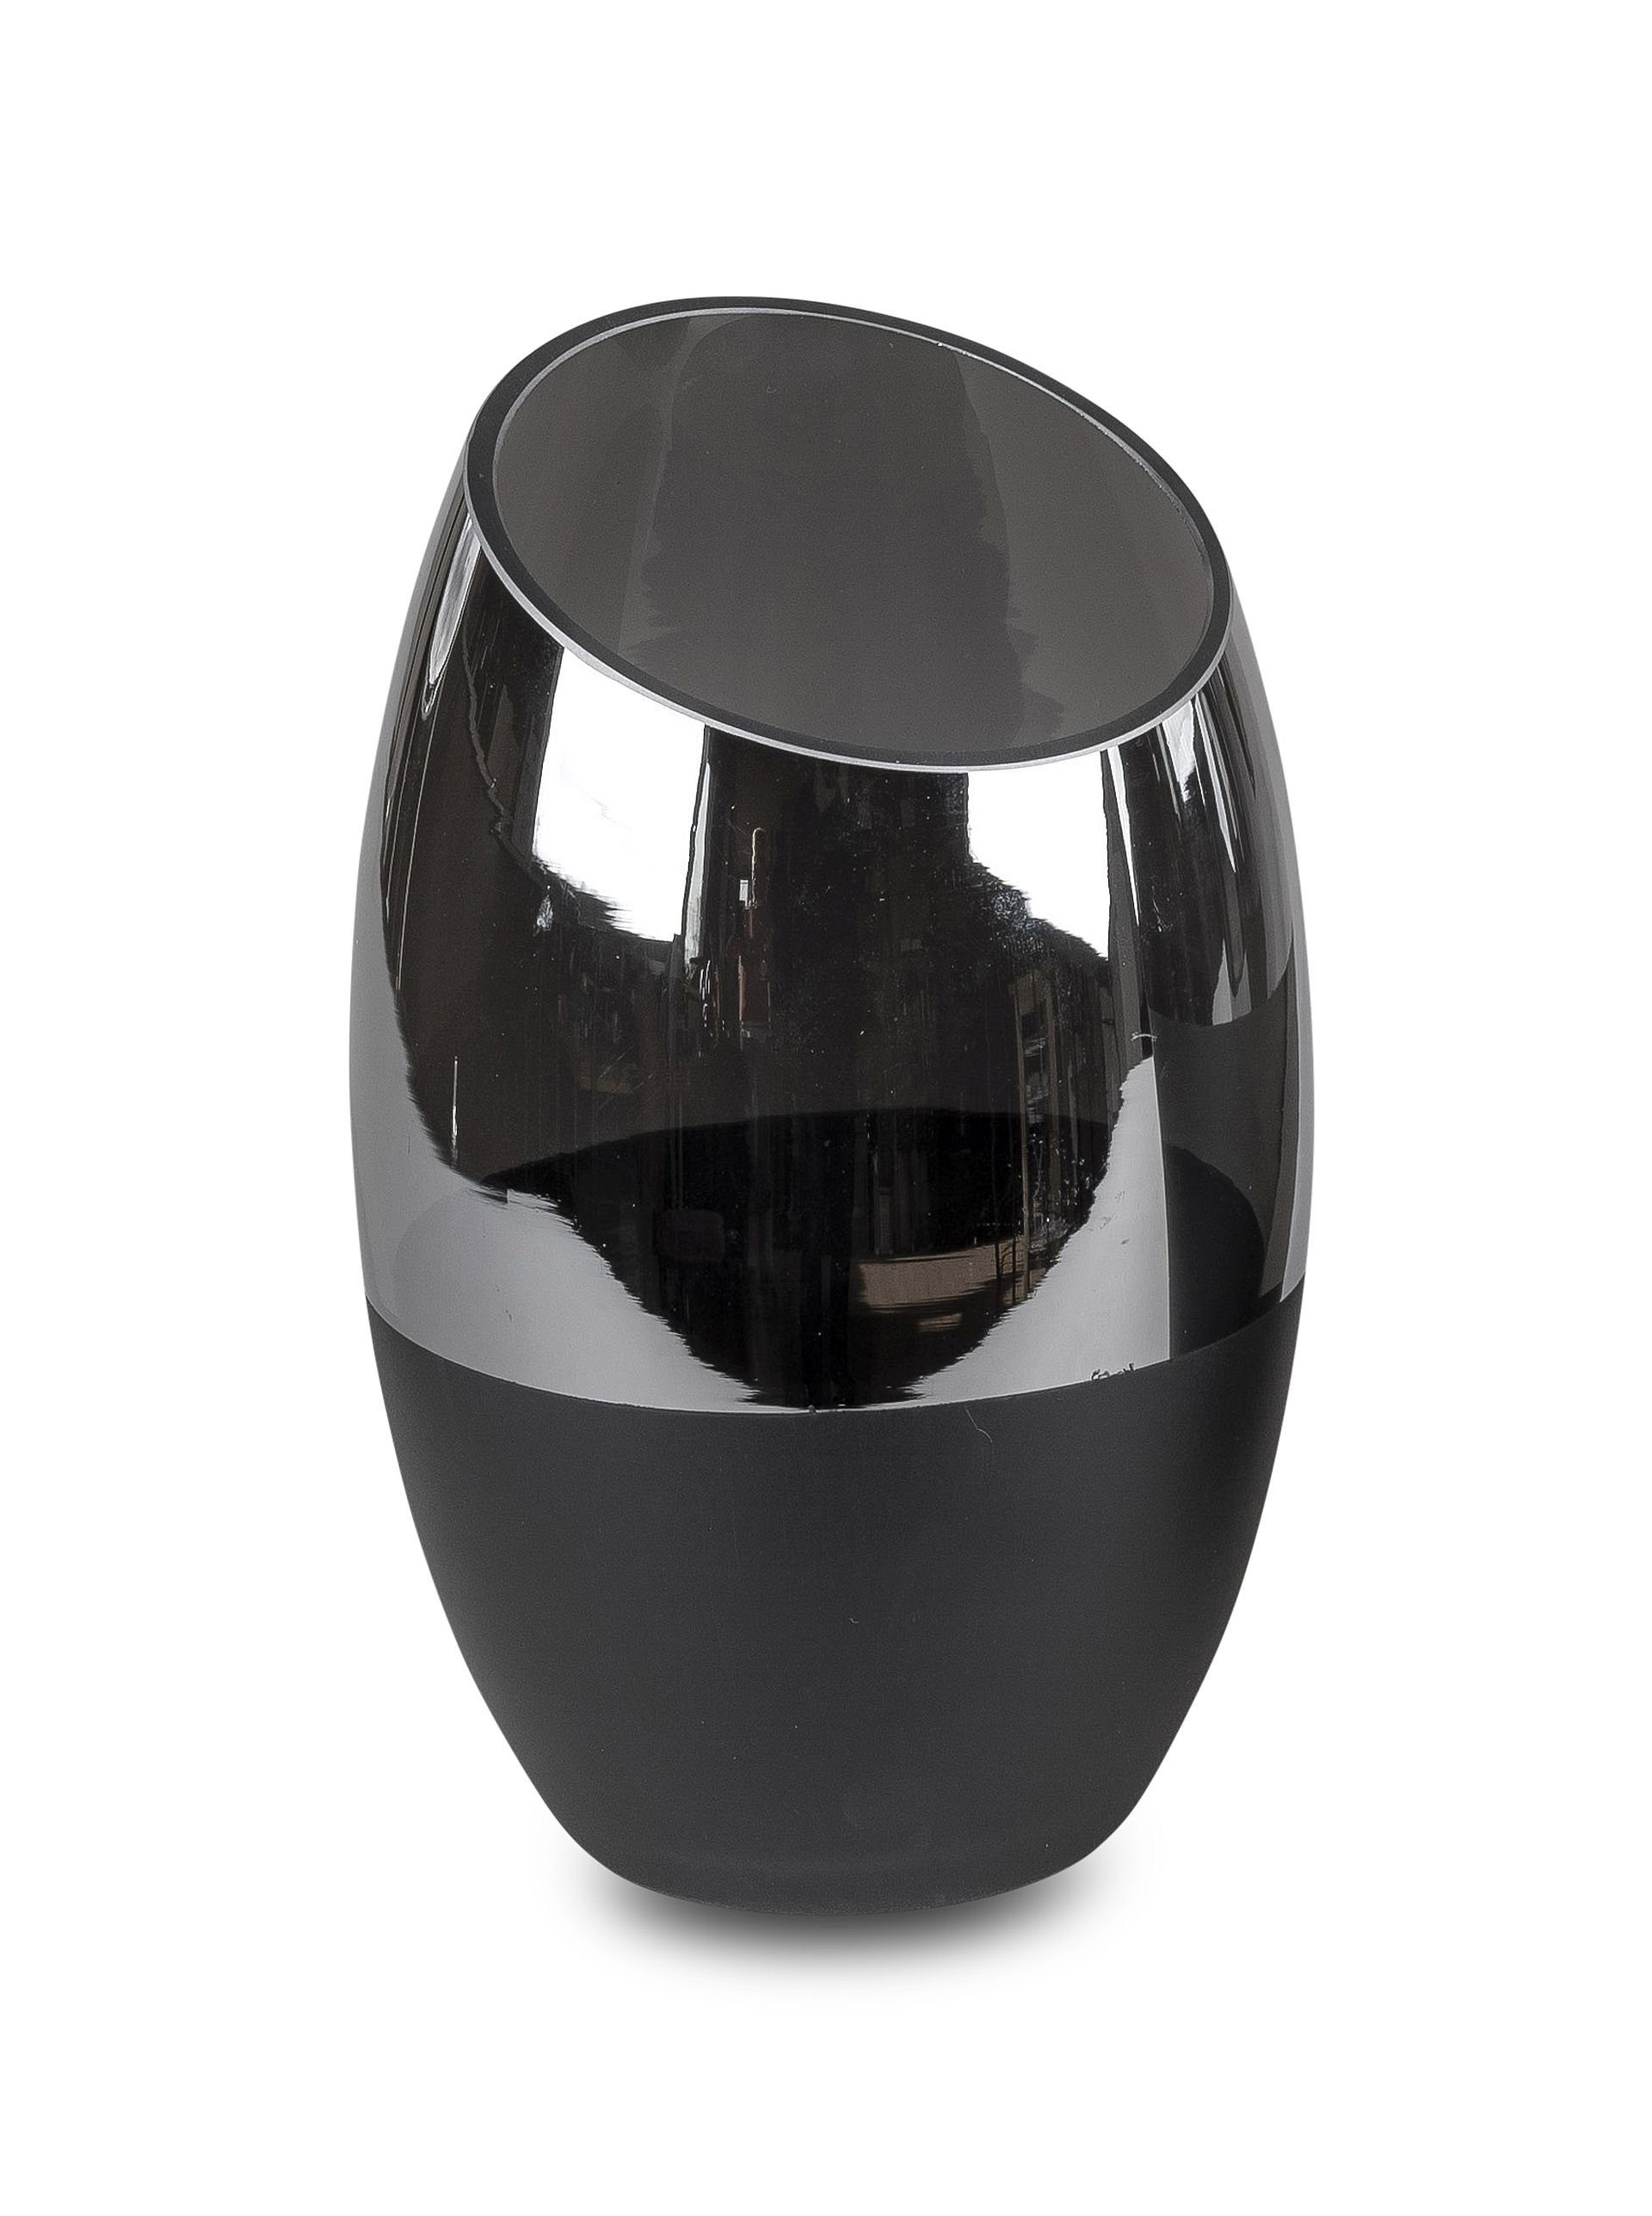 Small-Preis Tischvase Vase aus Glas in Metallic Design